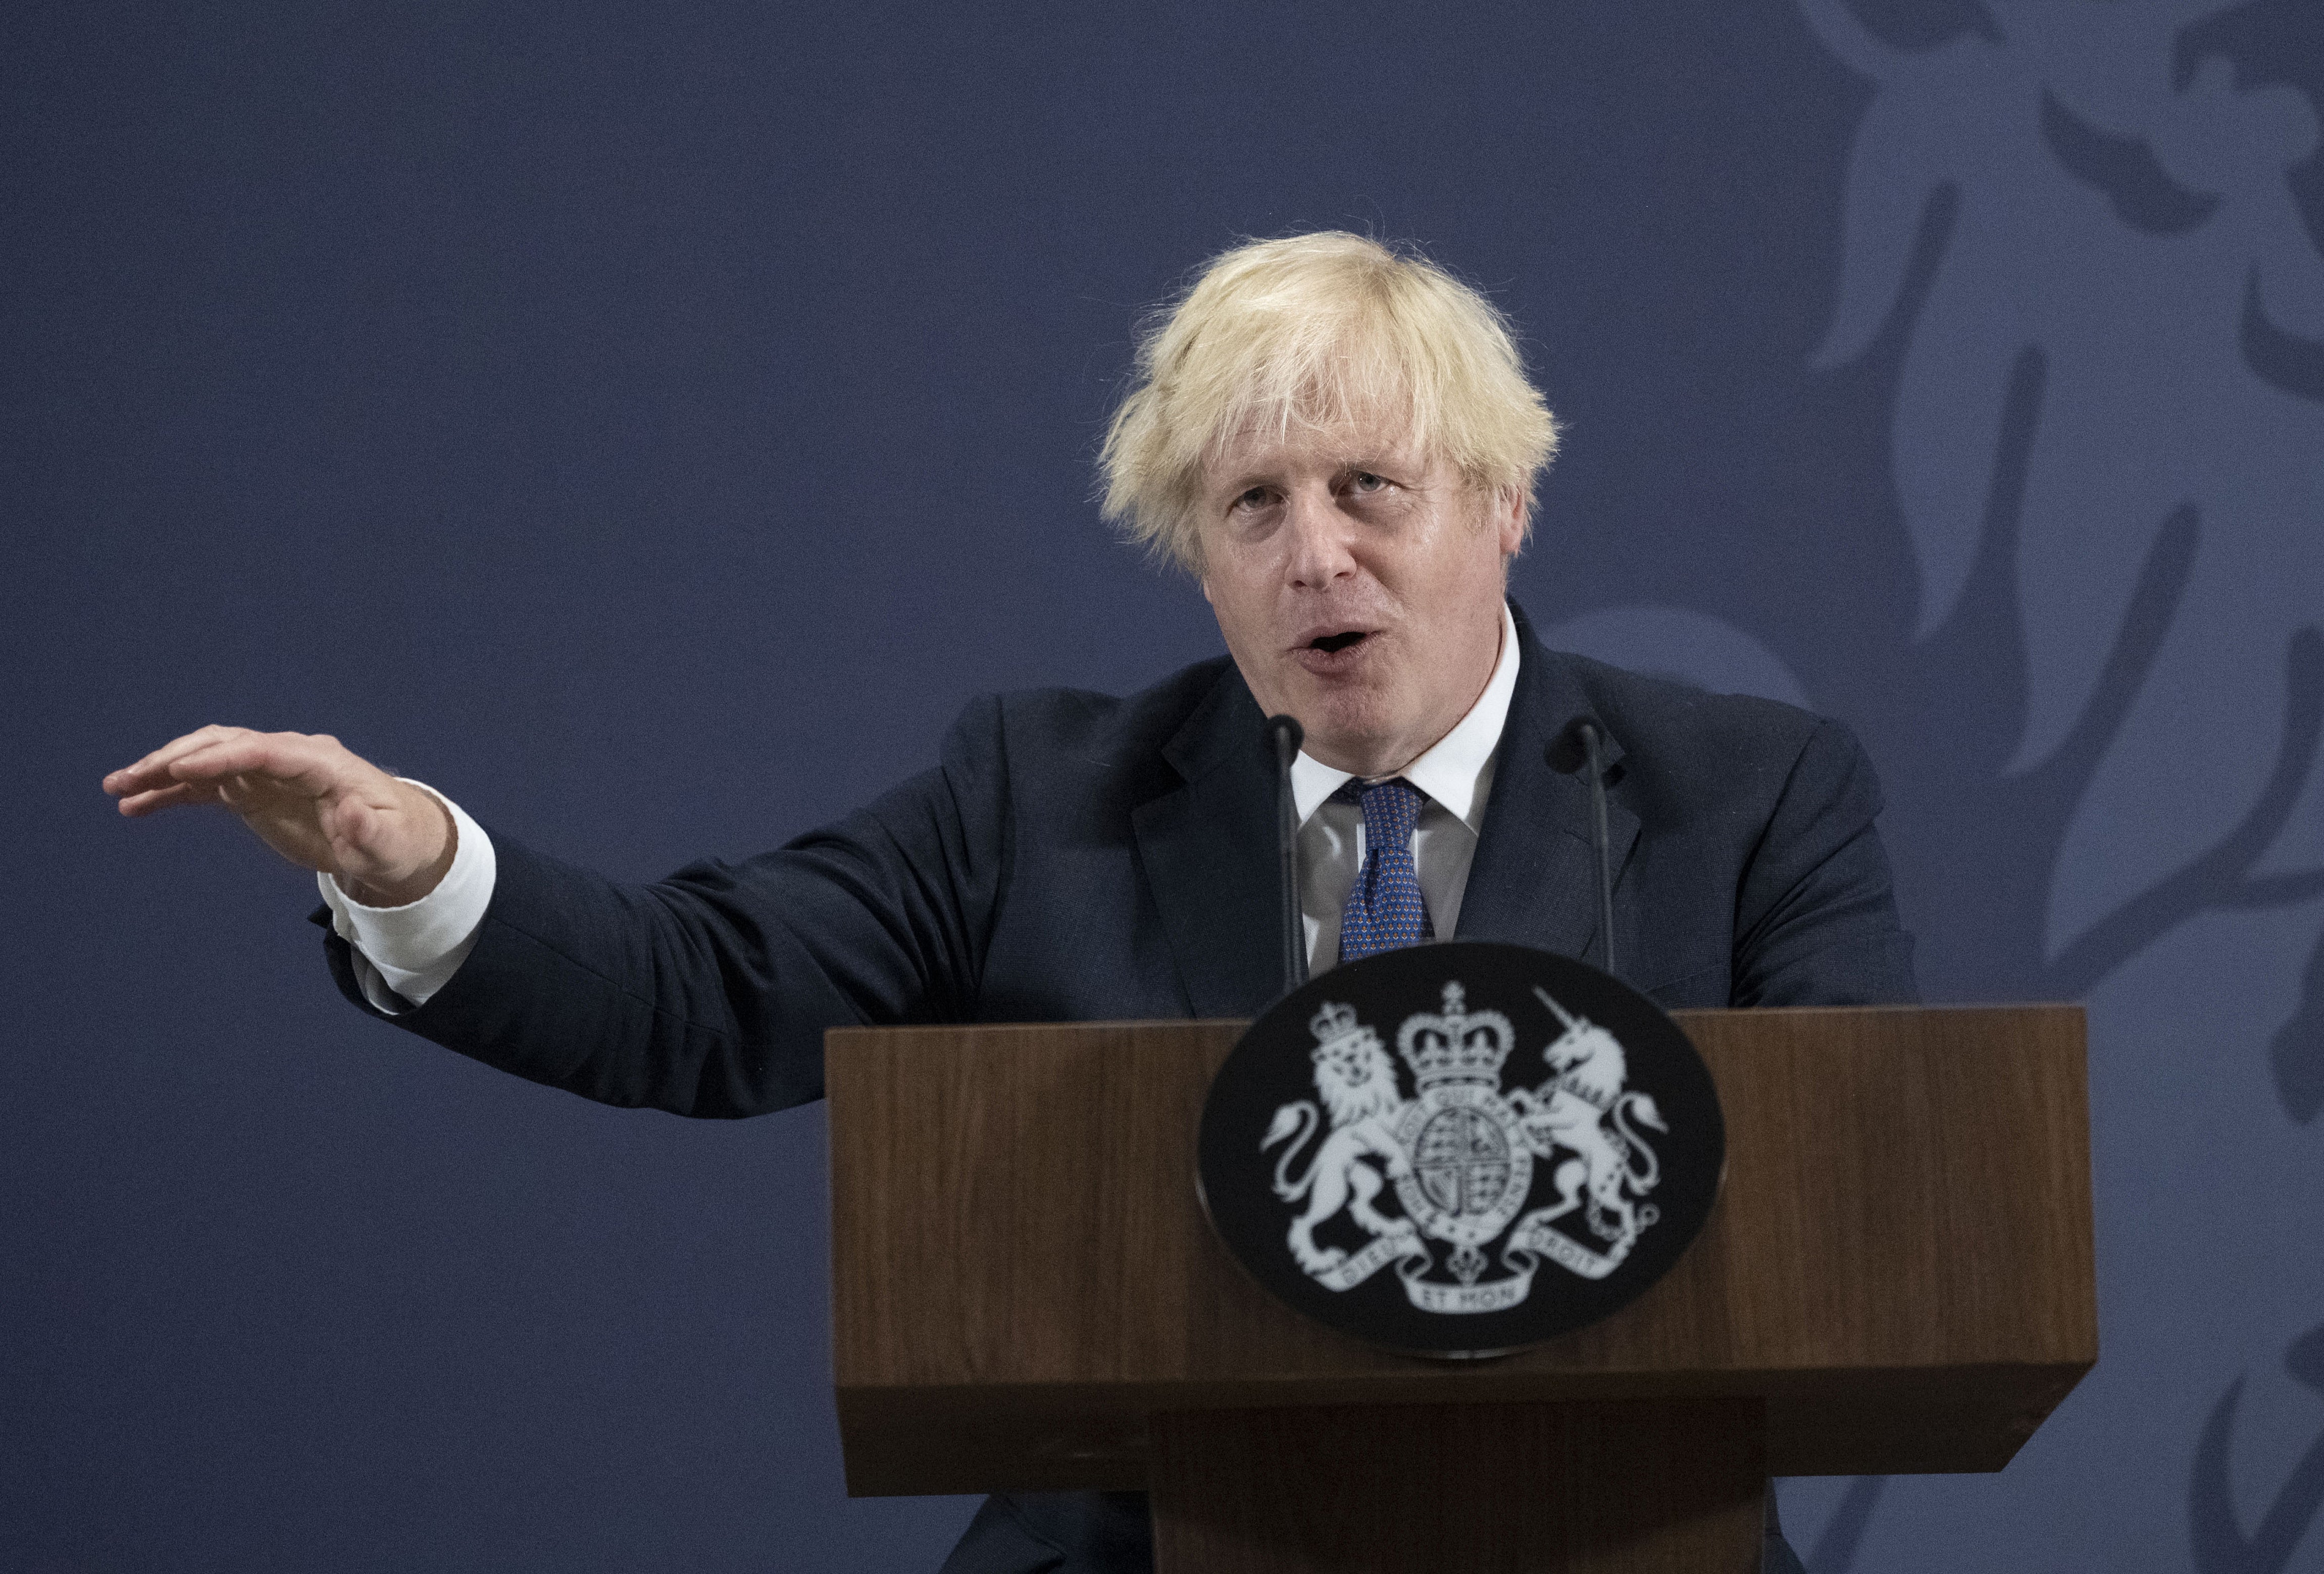 Prime Minister Boris Johnson pledged to create better opportunities outside London (David Rose/Daily Telegraph/PA)